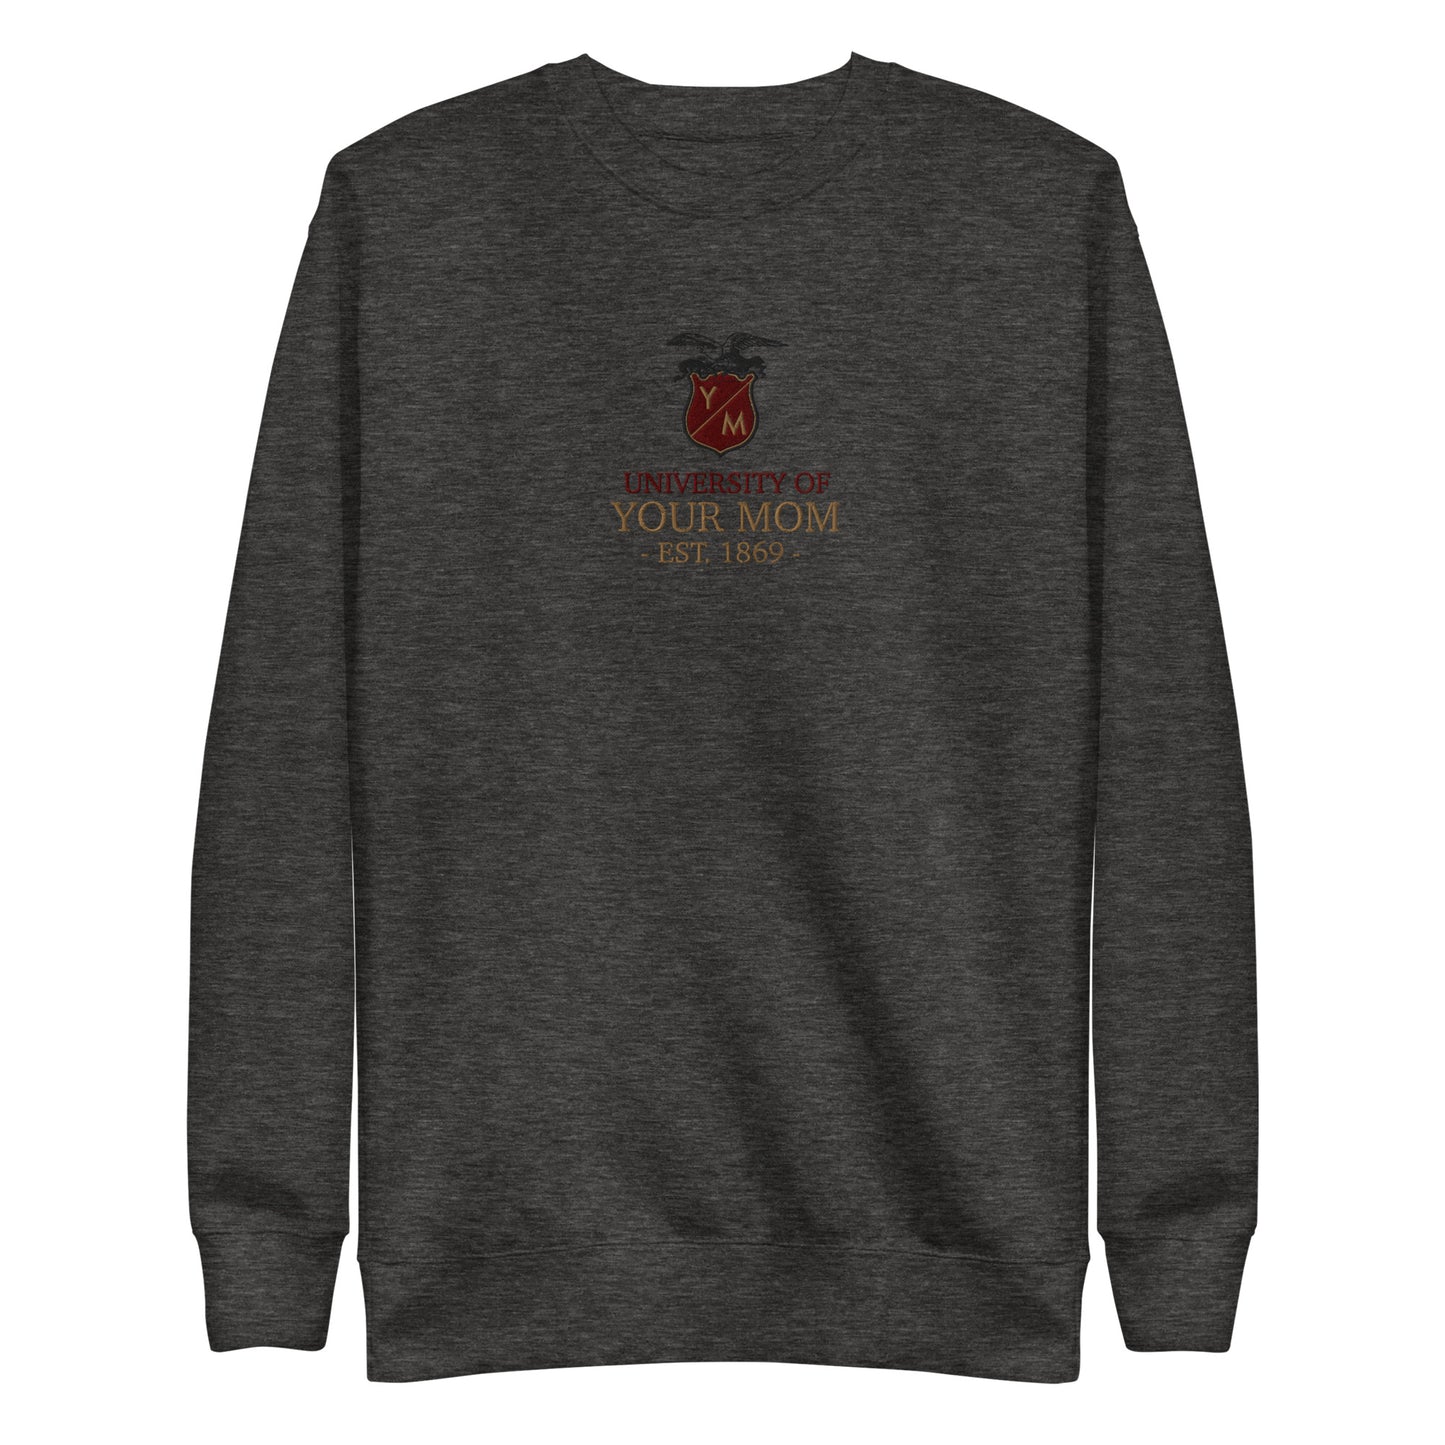 Your Mom University (YMU) Embroidered Sweatshirt